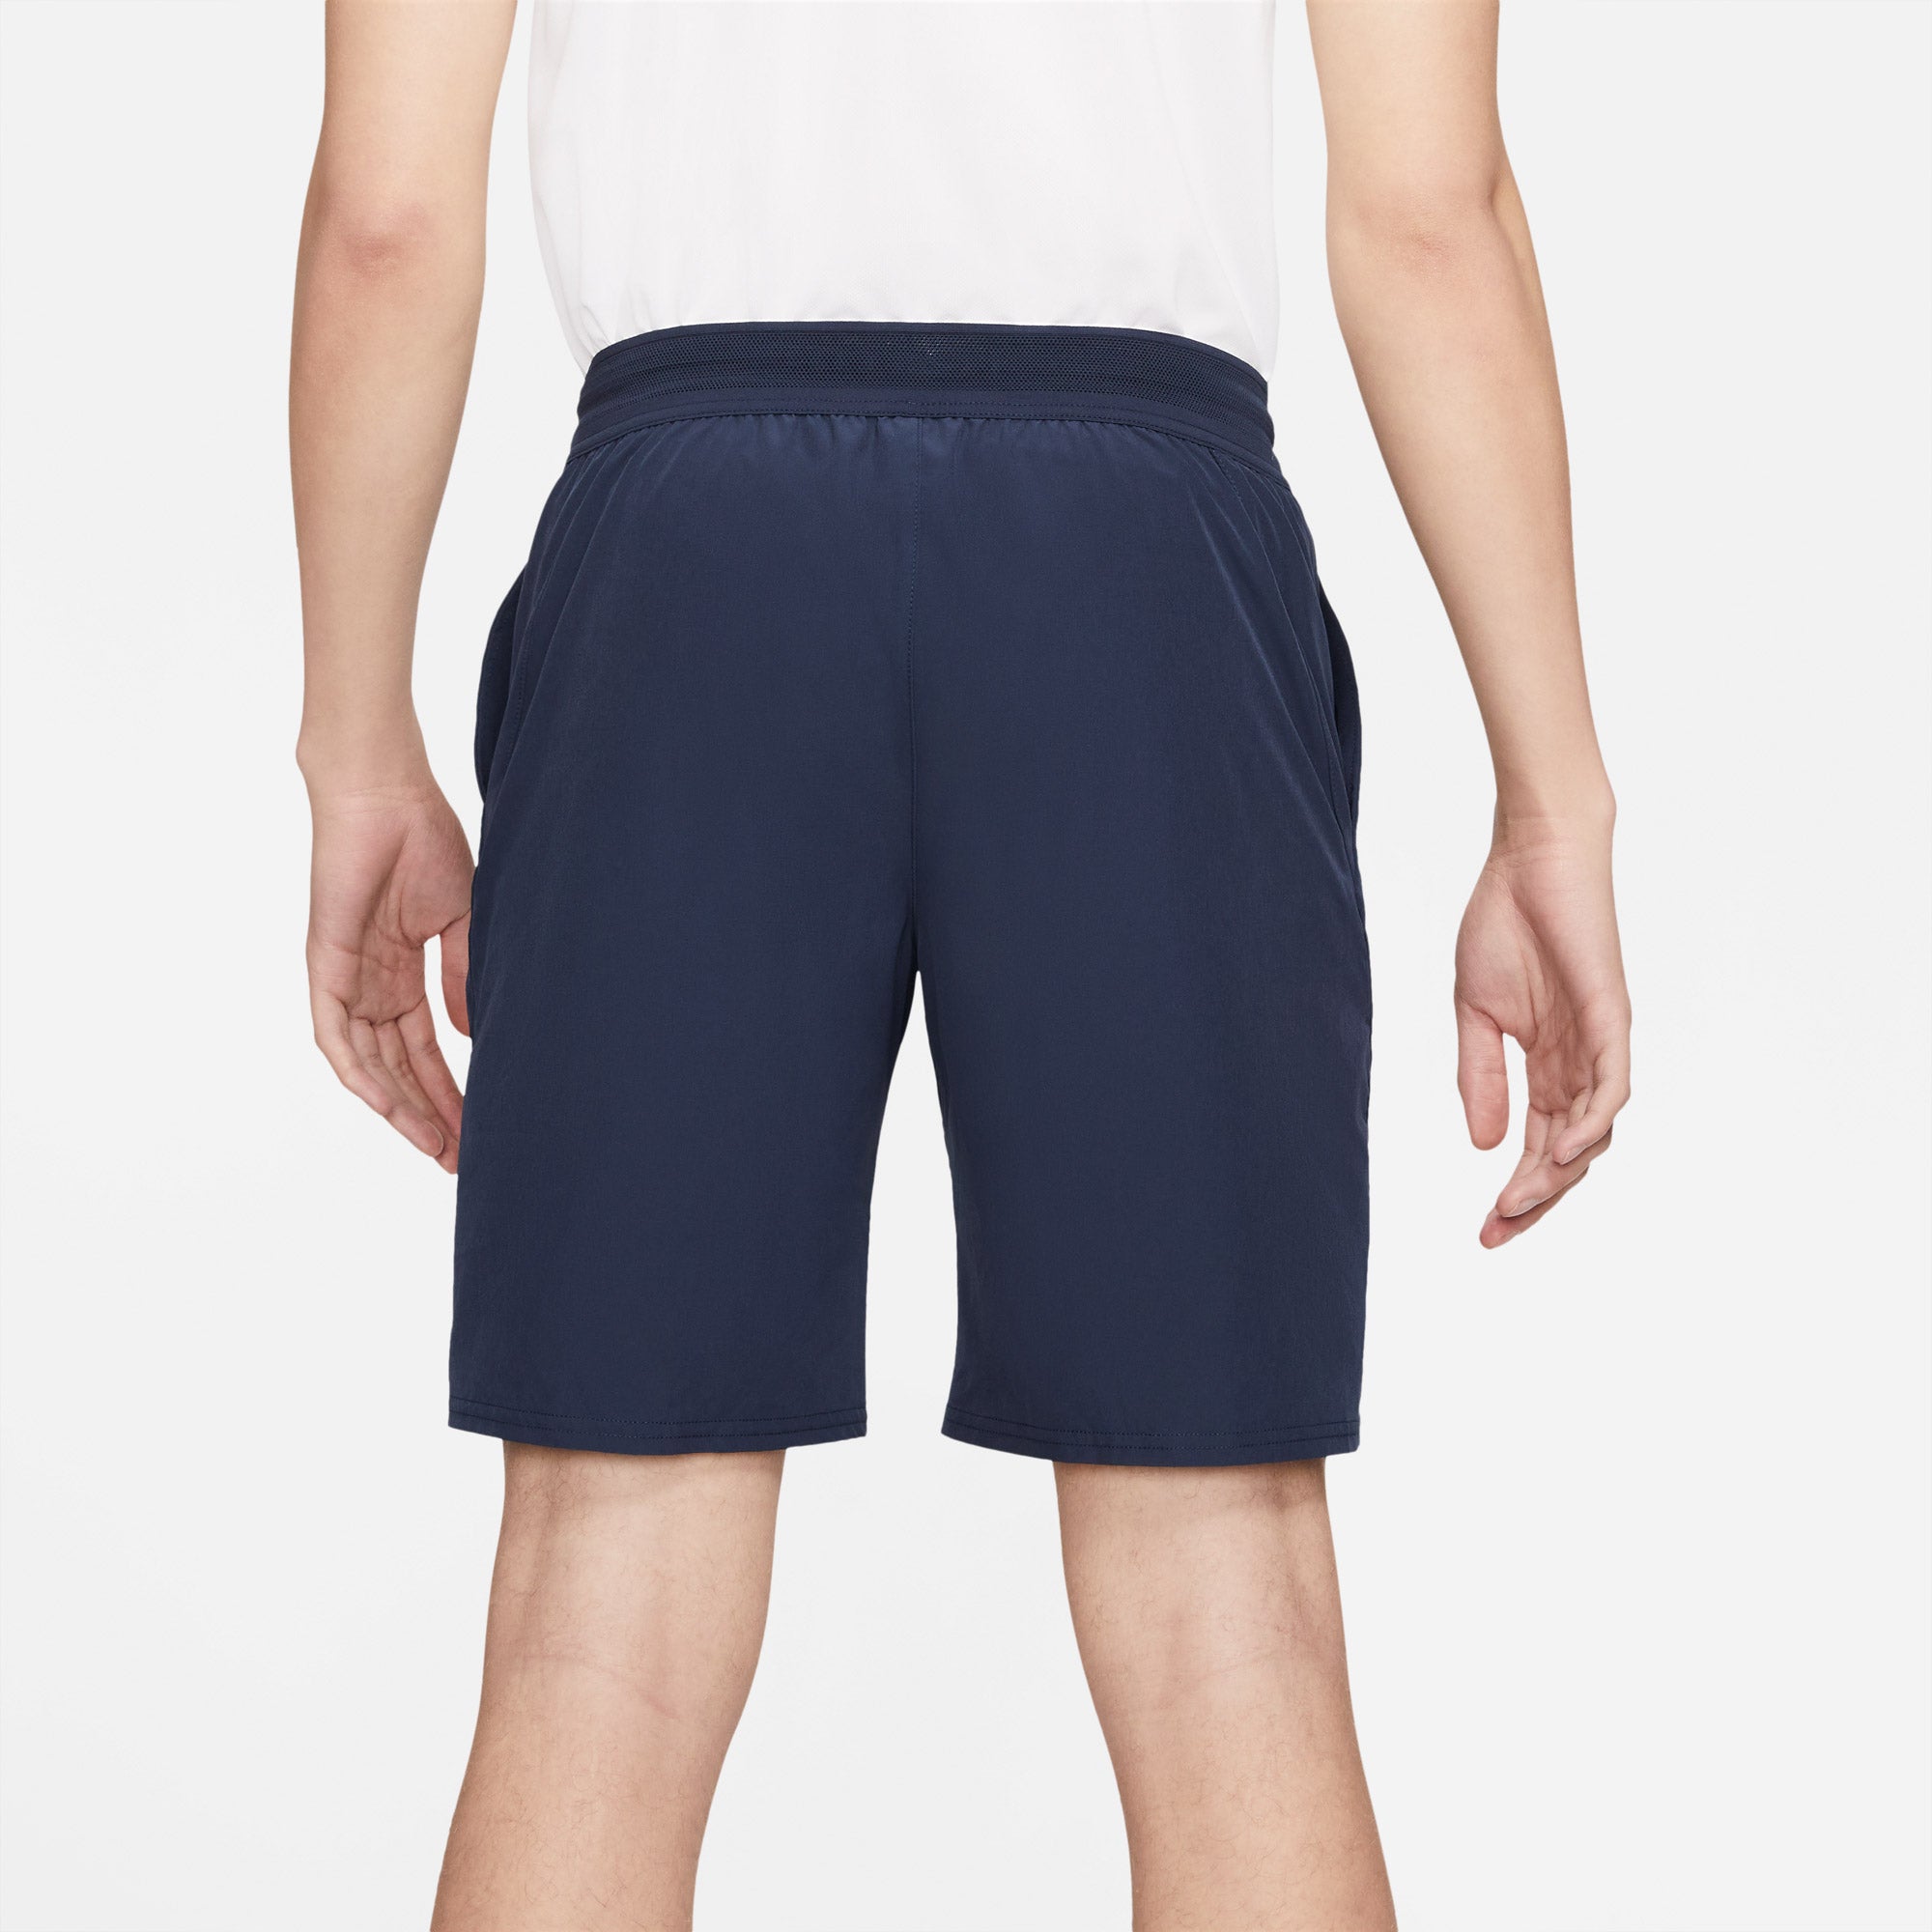 Nike Flex Advantage Men's 9-Inch Tennis Shorts Blue (2)